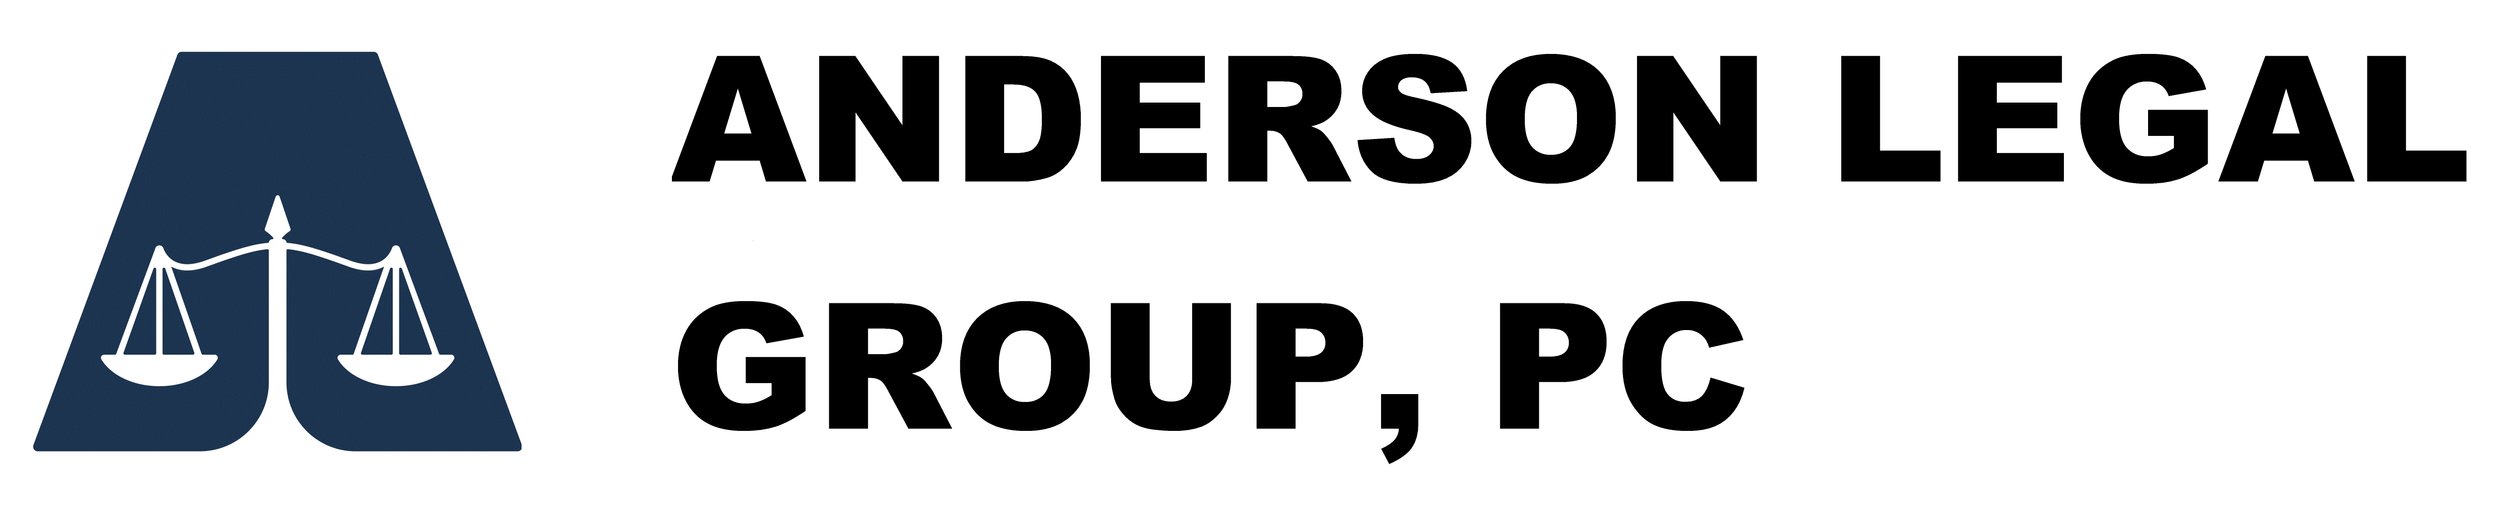 Anderson Legal Group.jpg